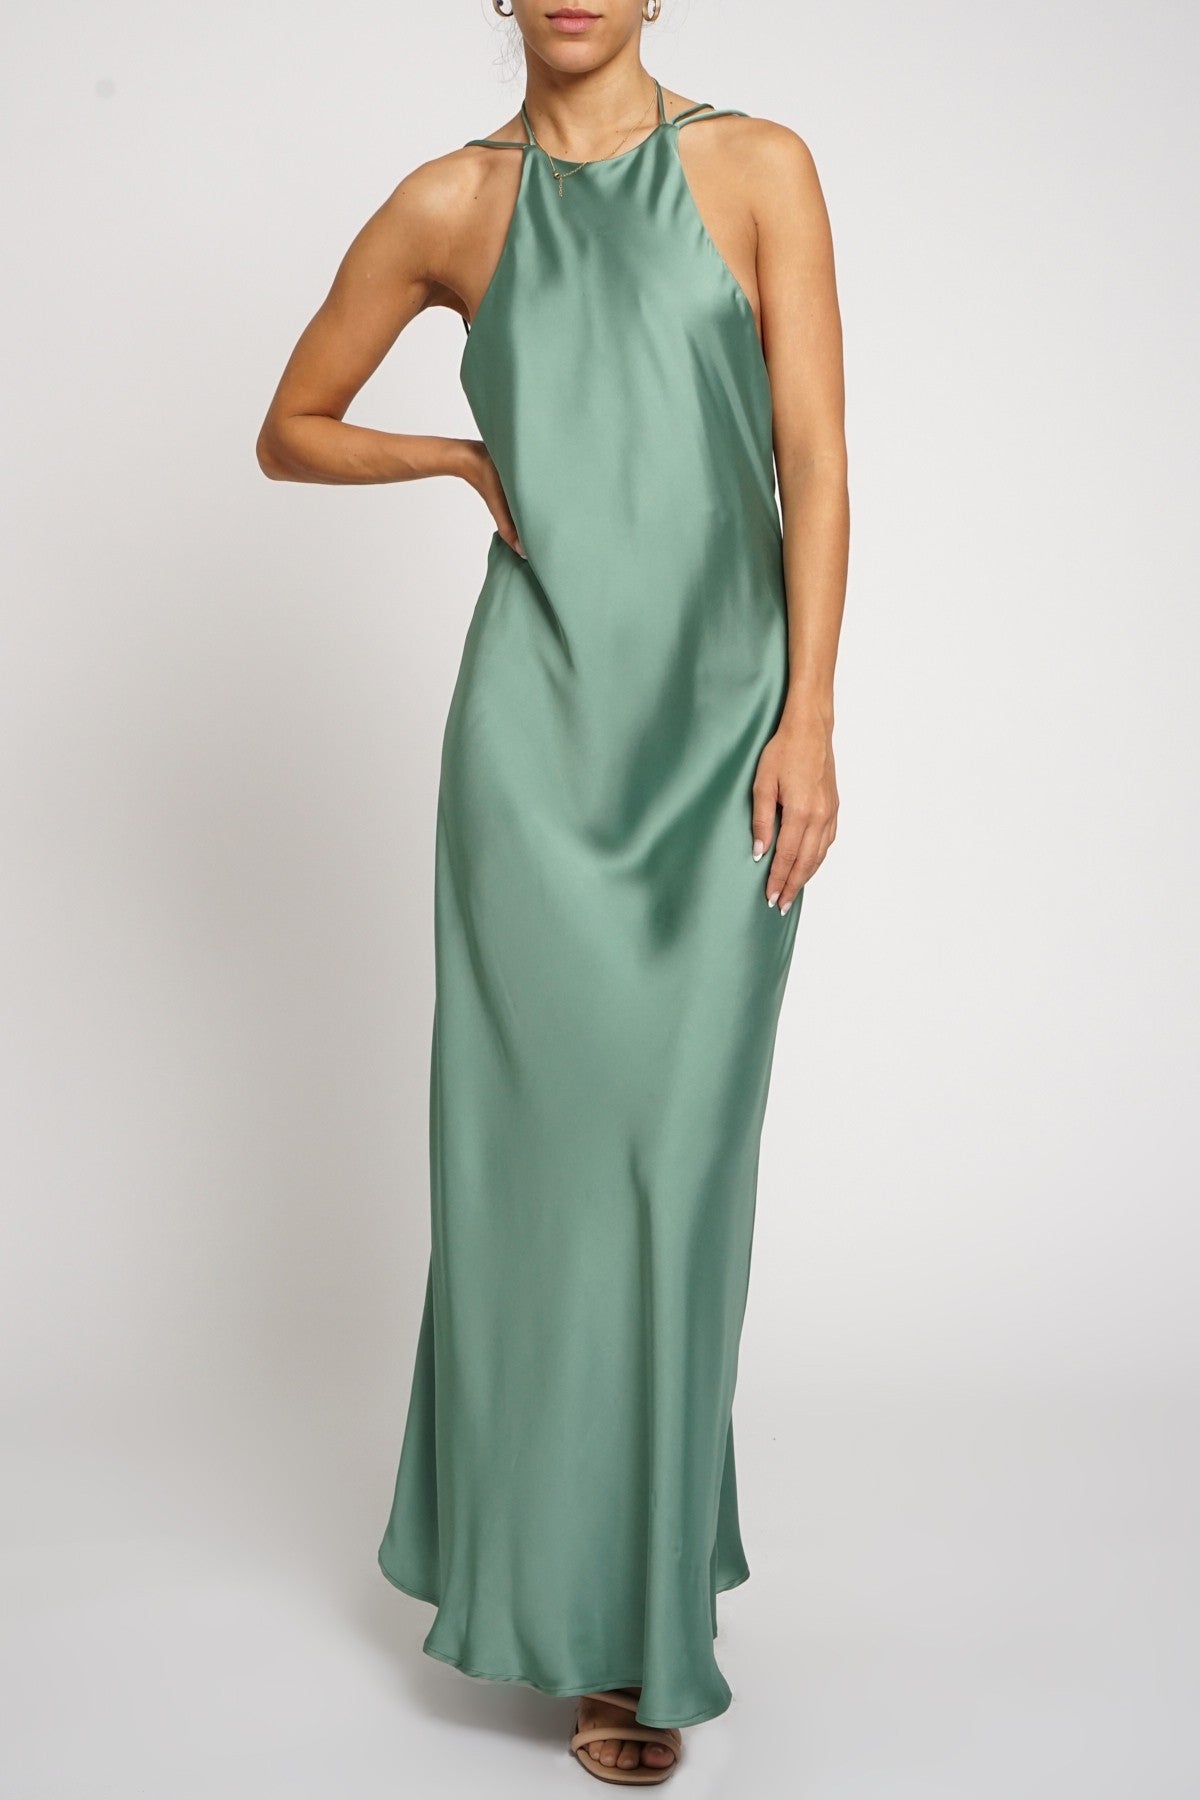 Tamara - verde venta - Lend the Trend renta de vestidos mexico